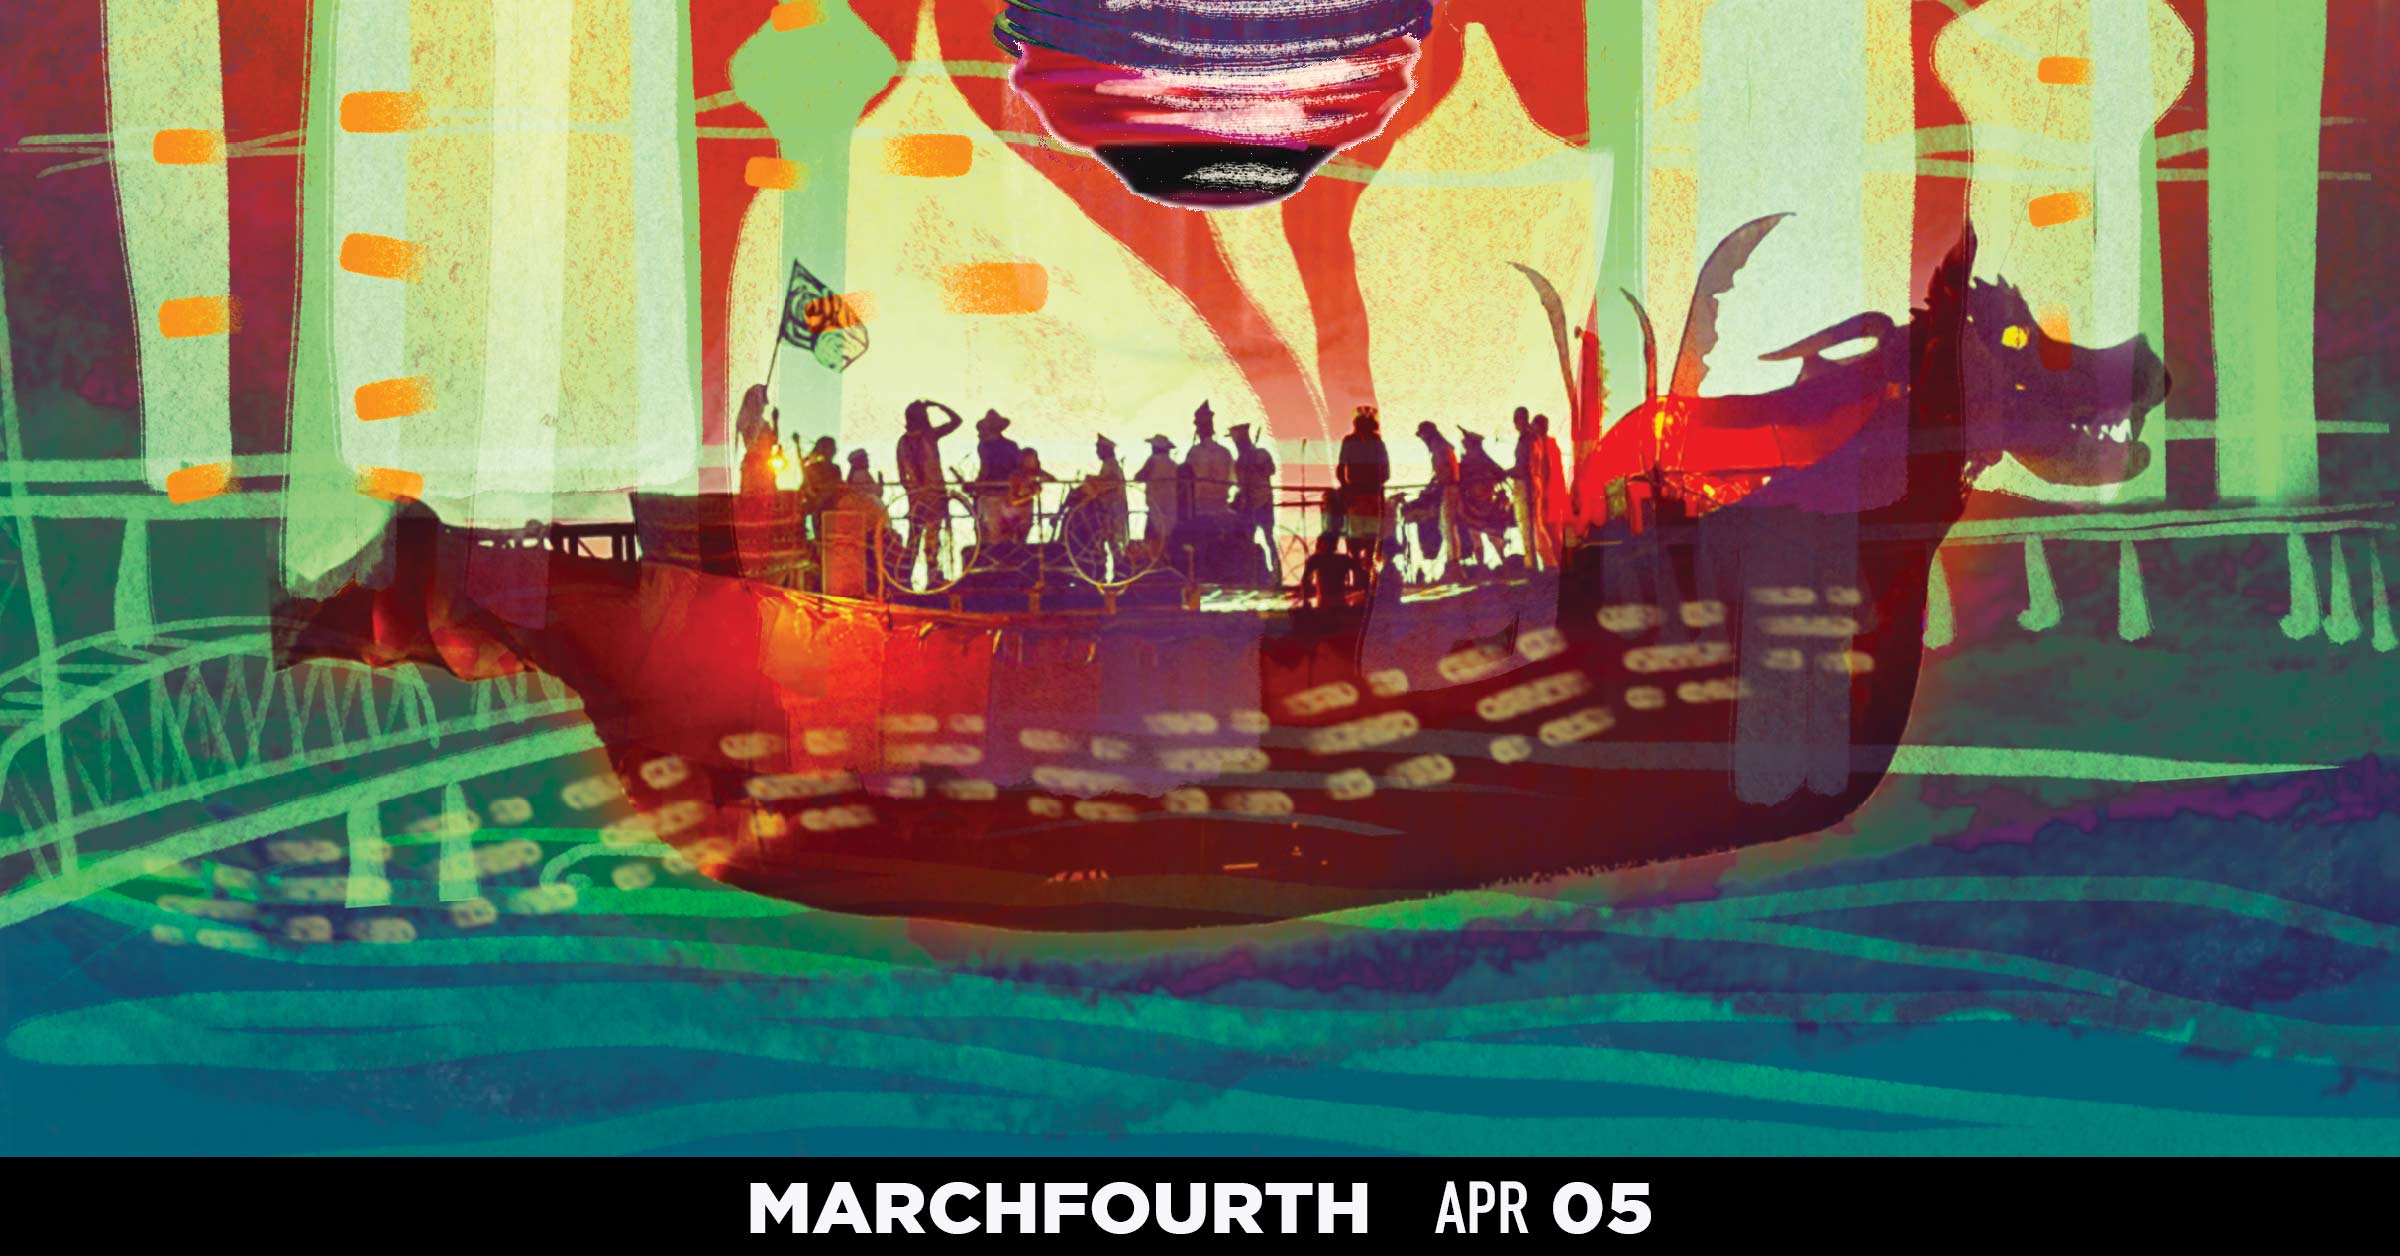 MarchFourth - Apr 05